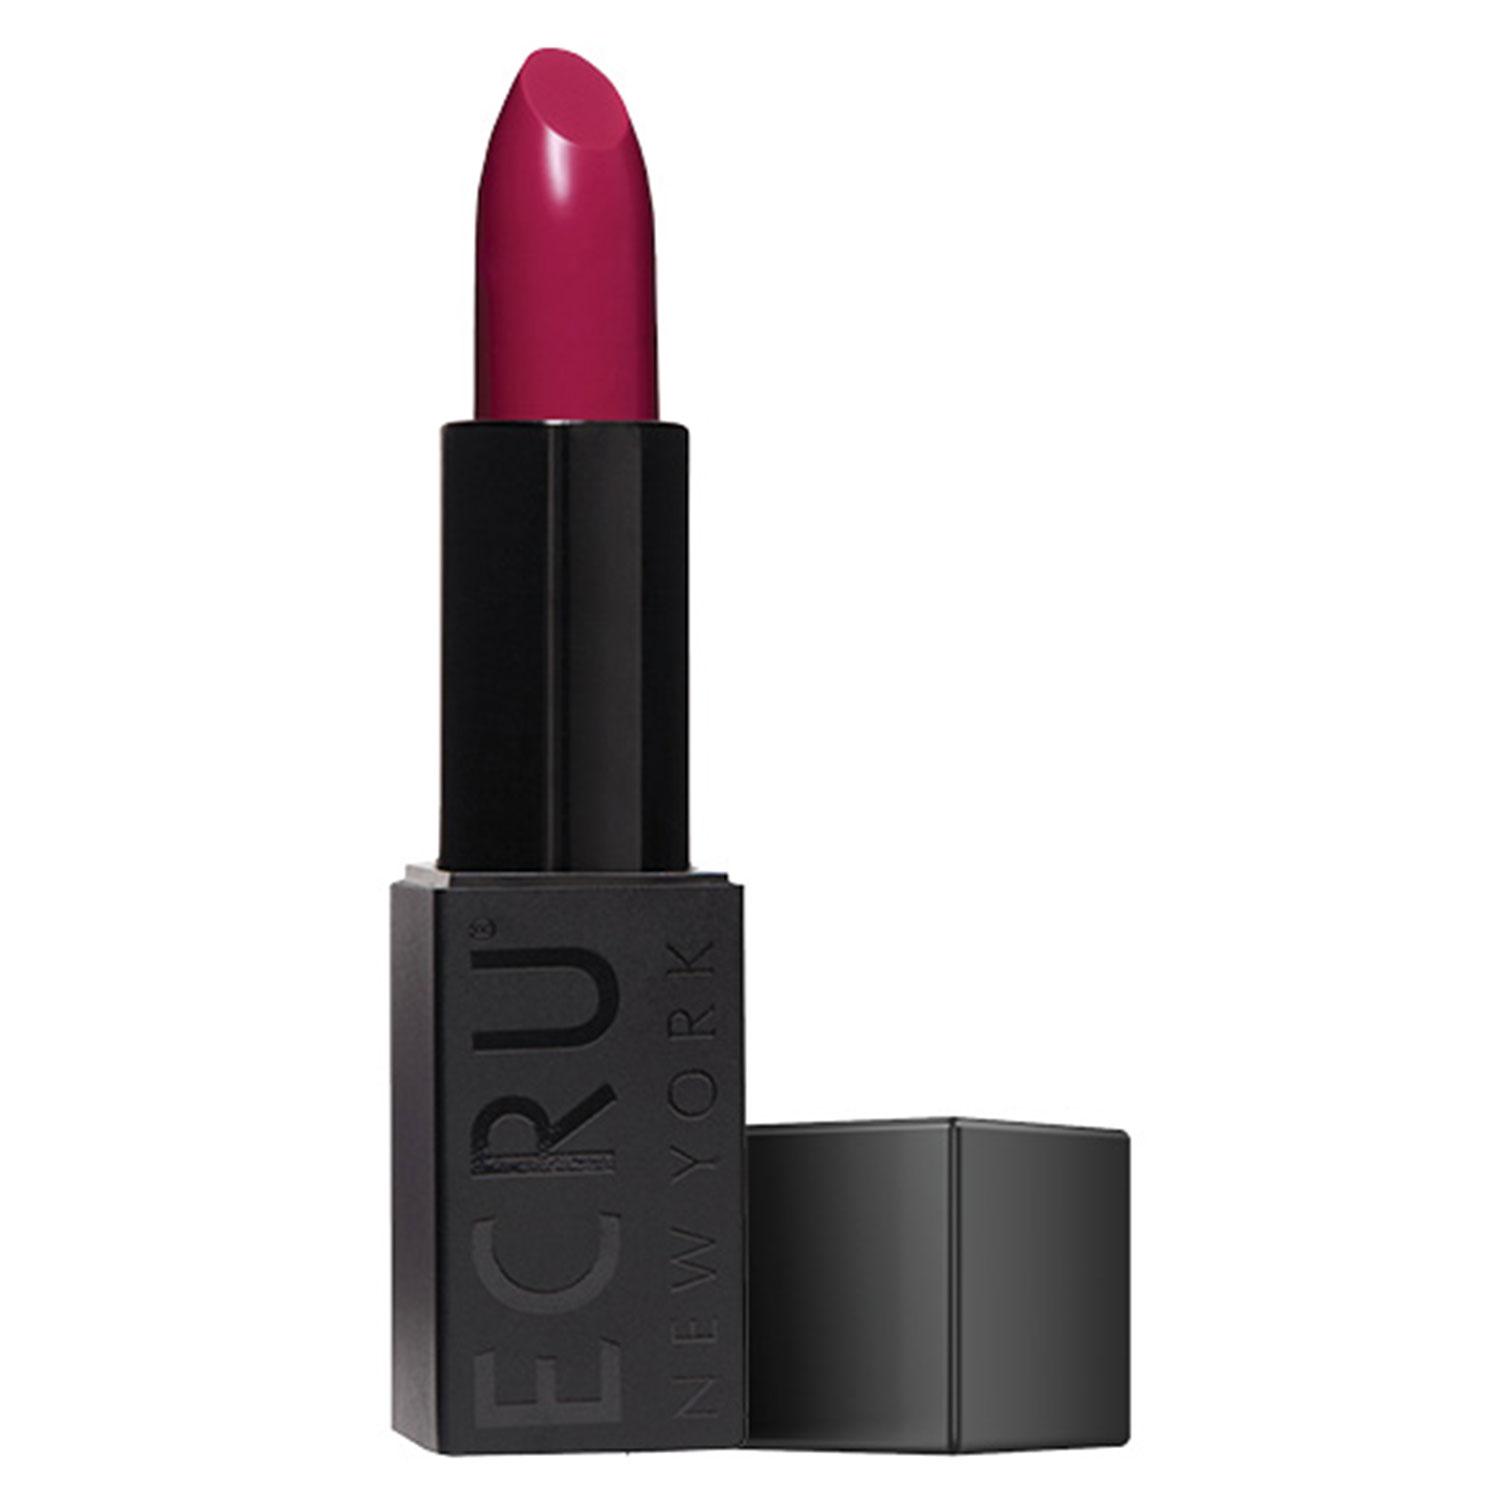 Ecru Beauty - VelvetAir Lipstick Plumberry